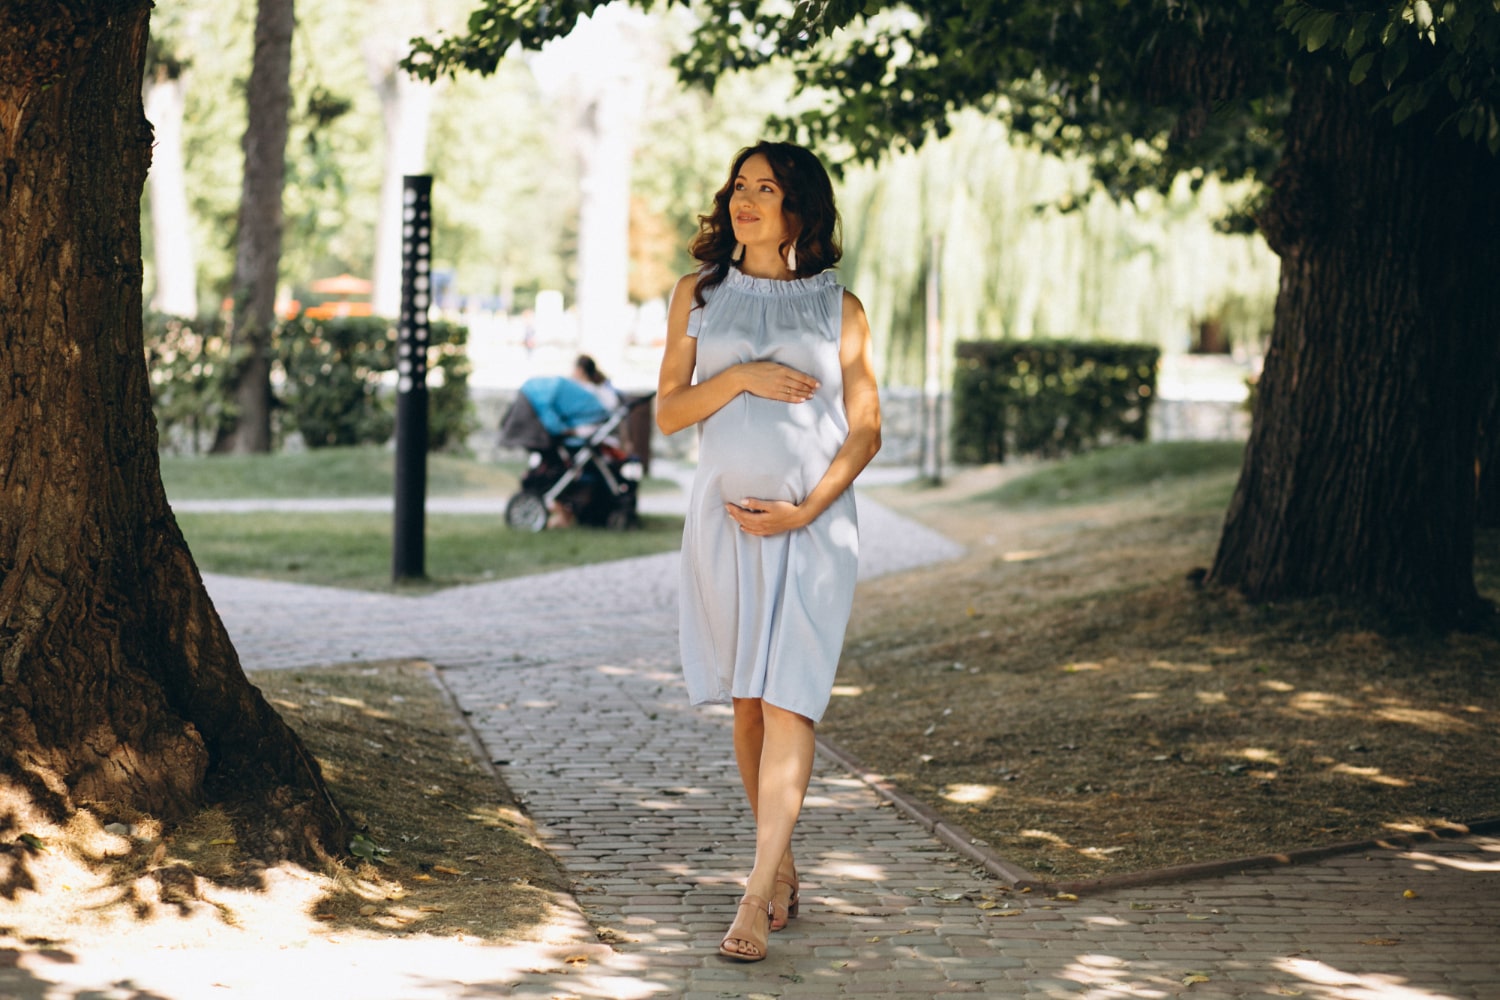  Impressive Urban Maternity Photos: Women Embracing Motherhood